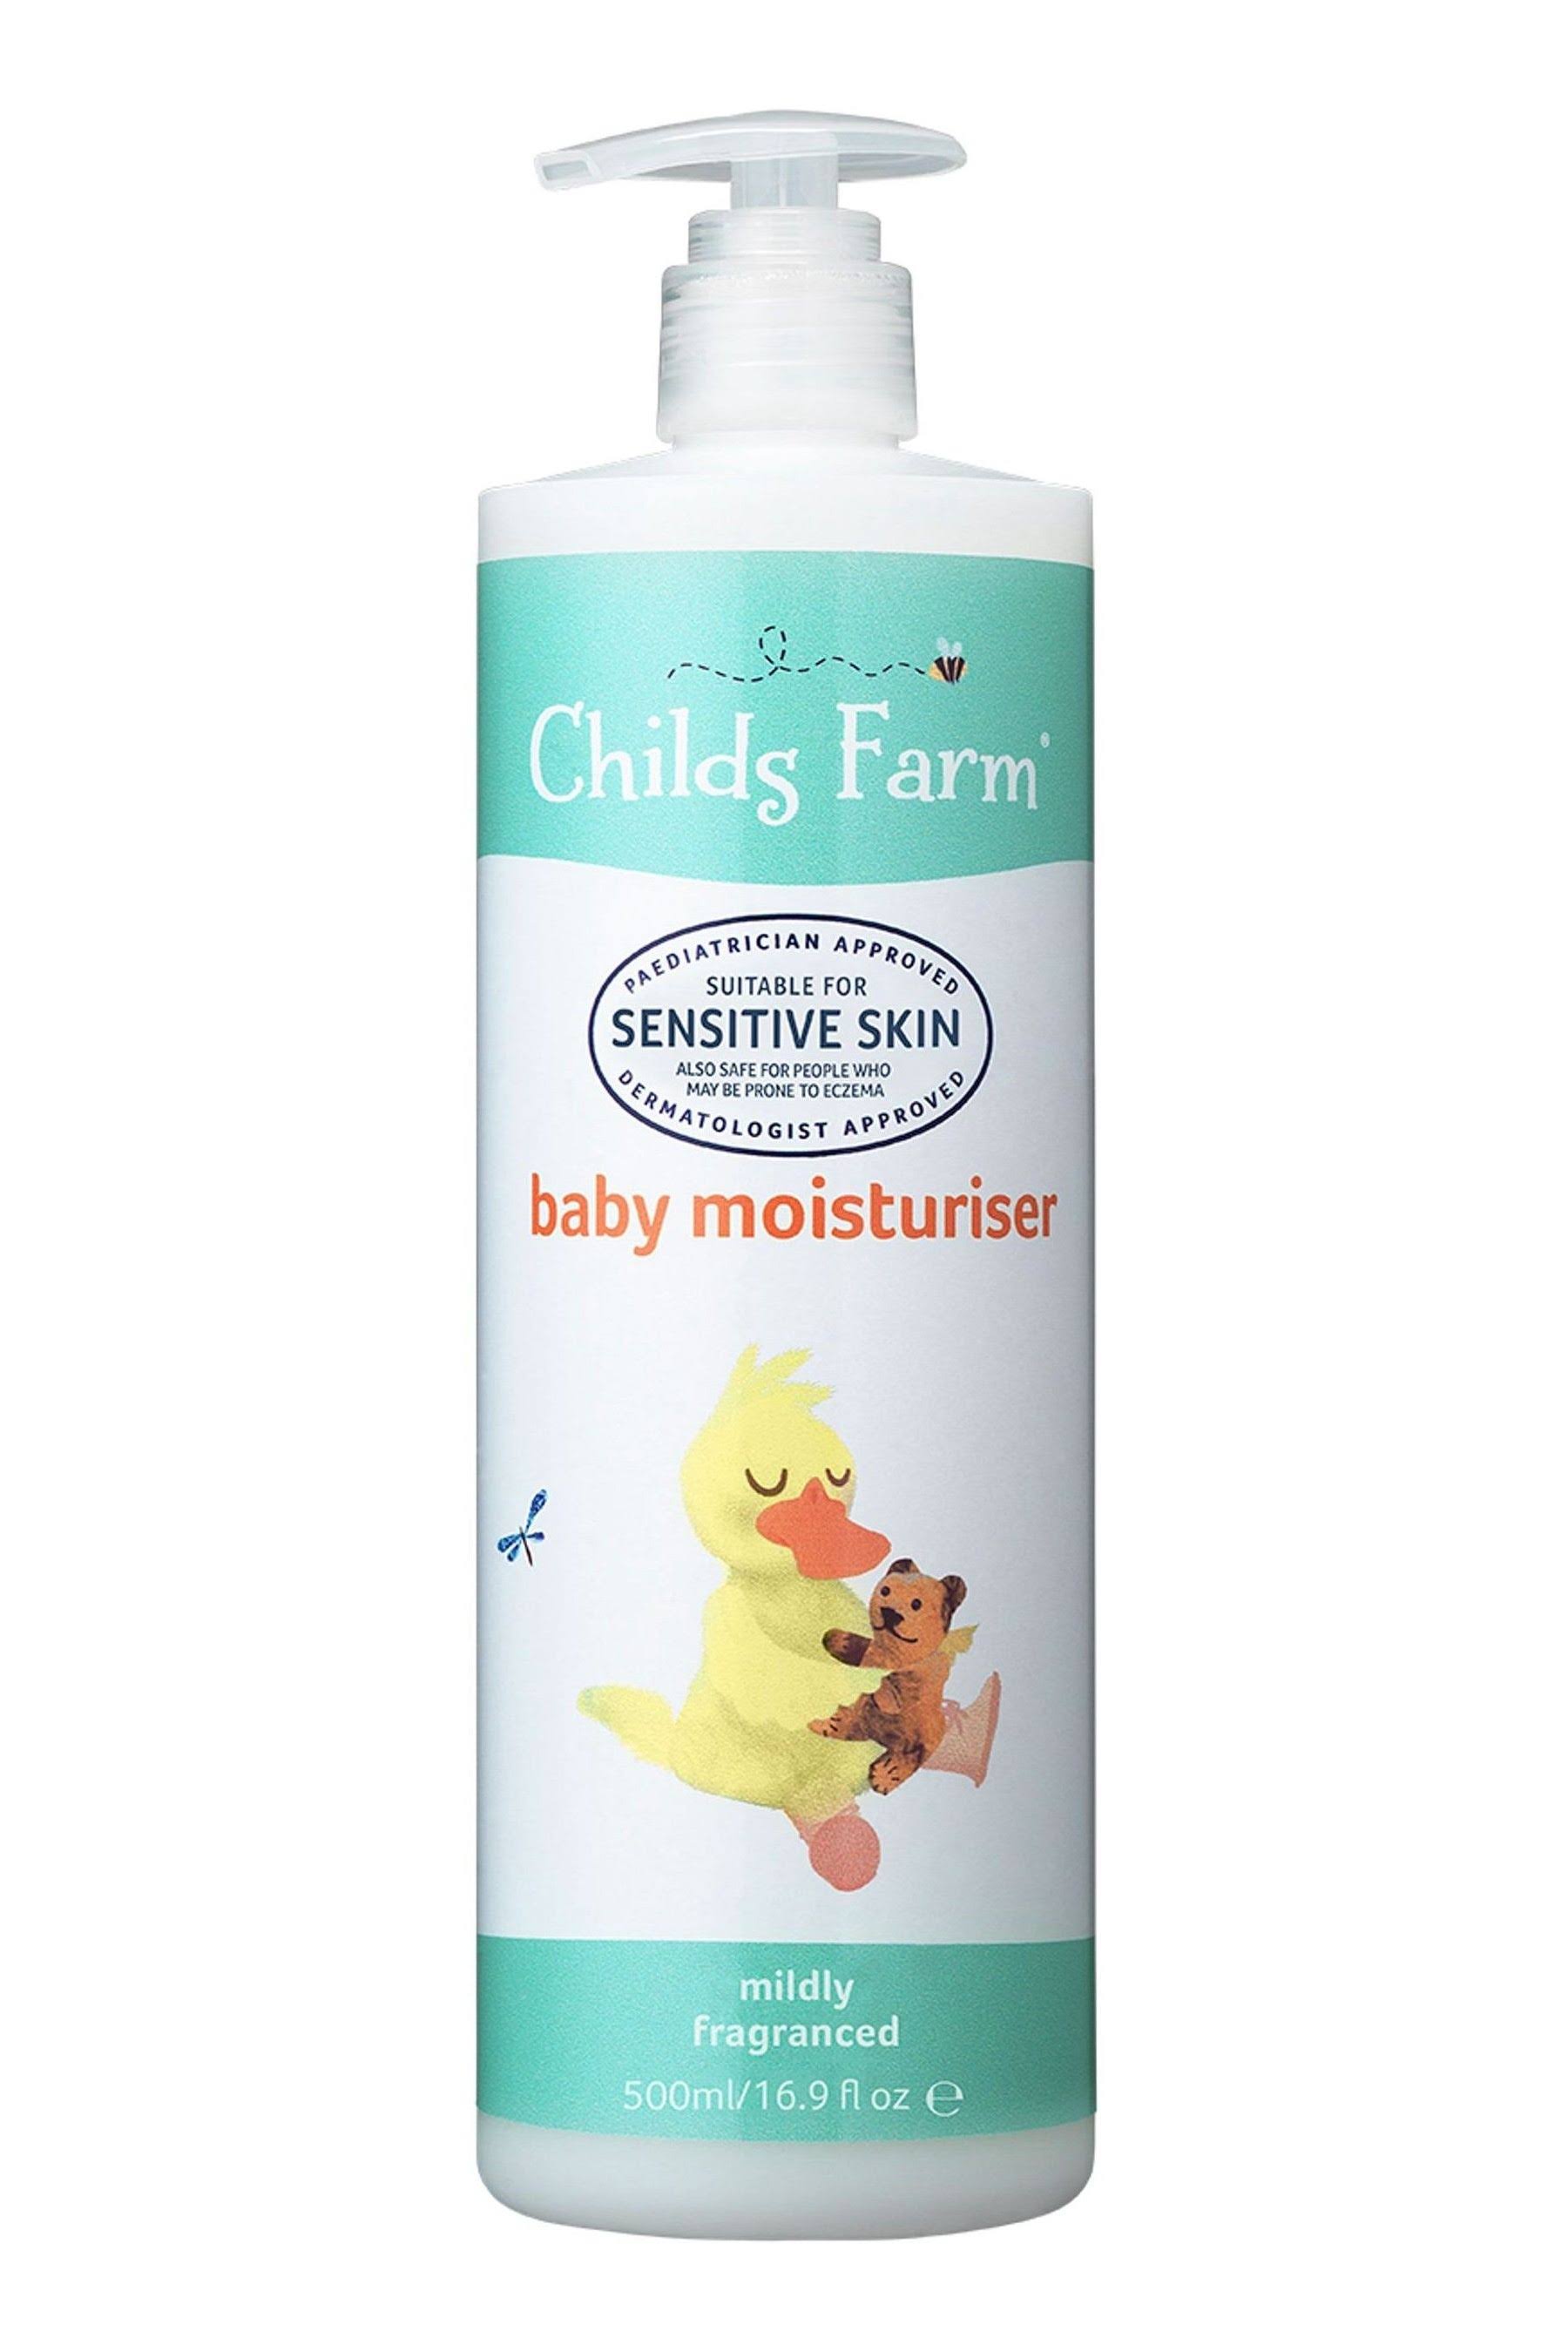 Childs Farm Baby Moisturiser - 500ml, Shea & Cocoa